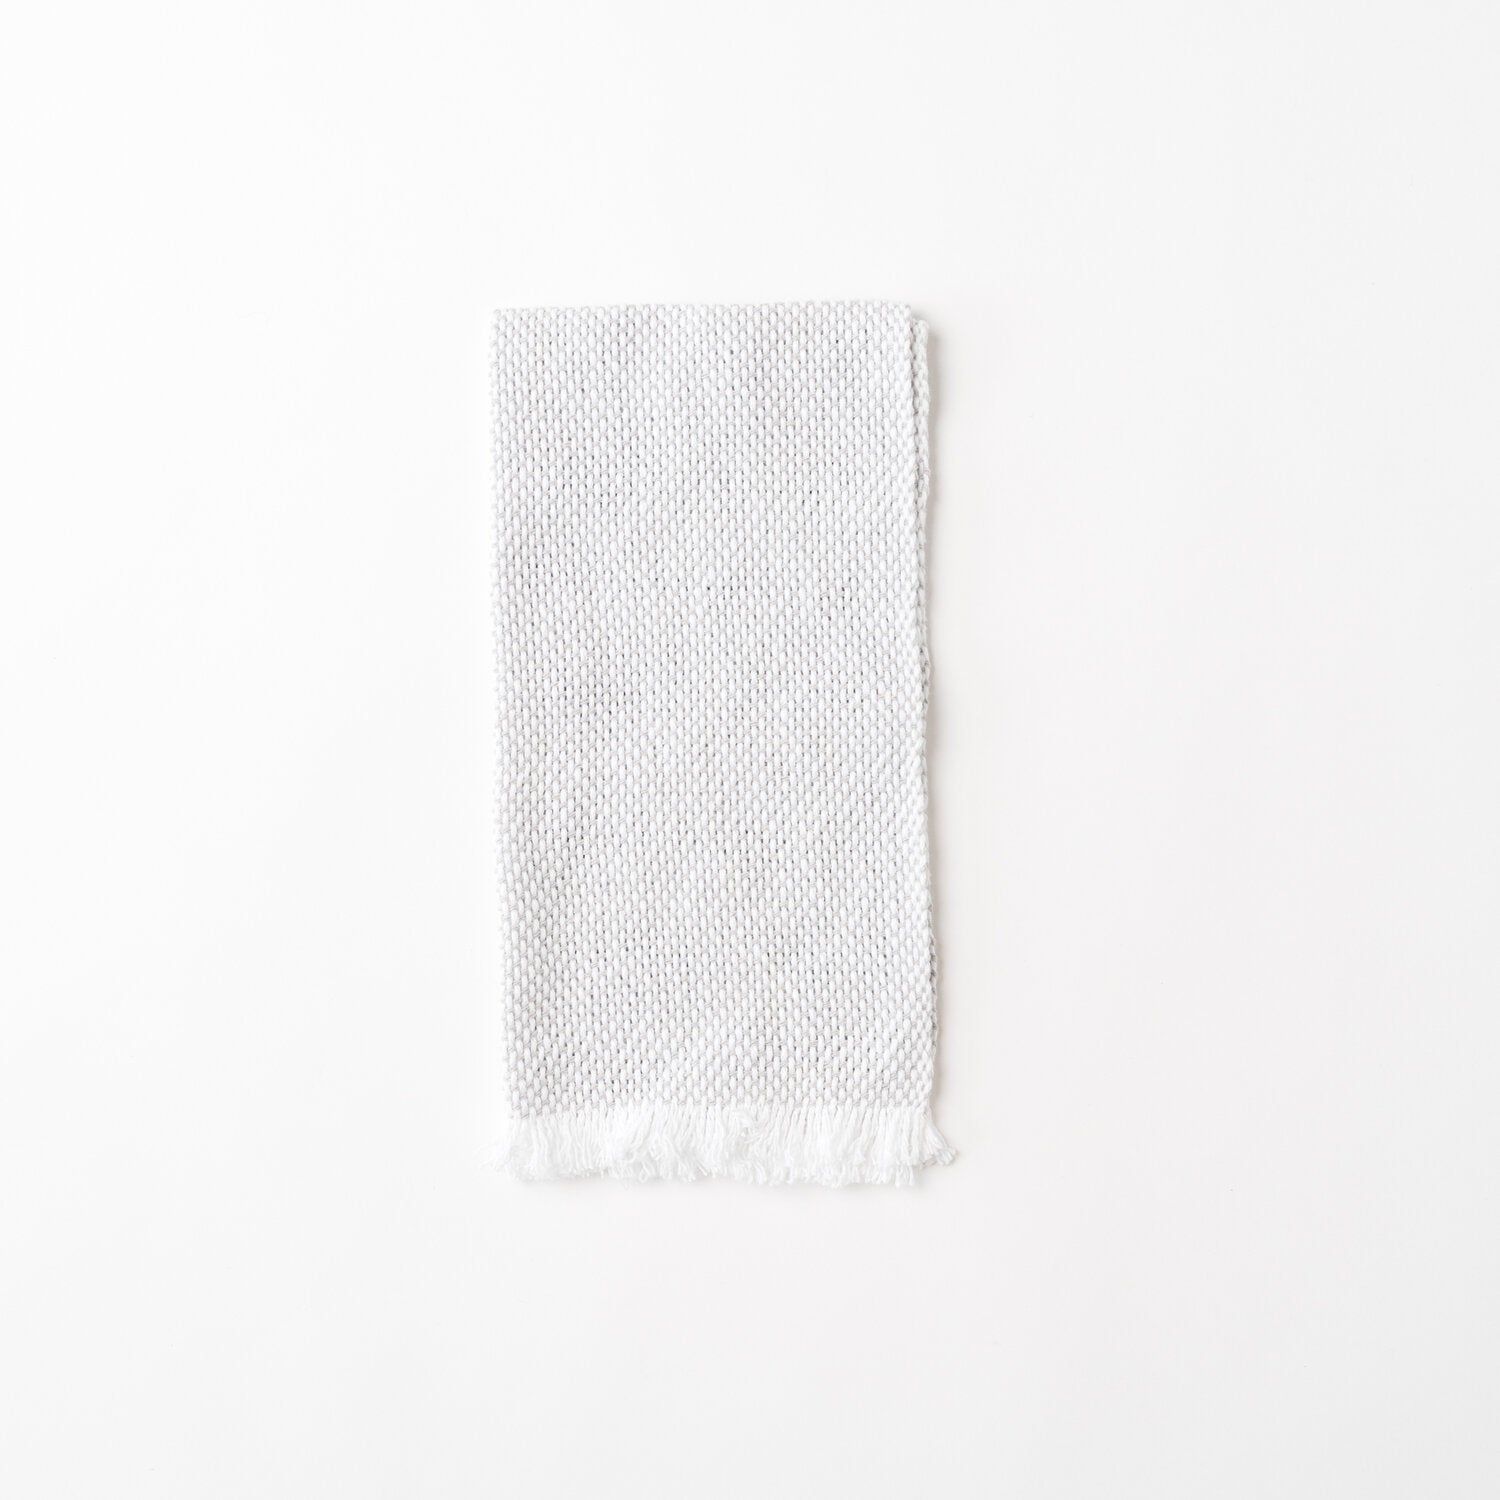 KD Weave Greige + White Hand Towel, Set of 2